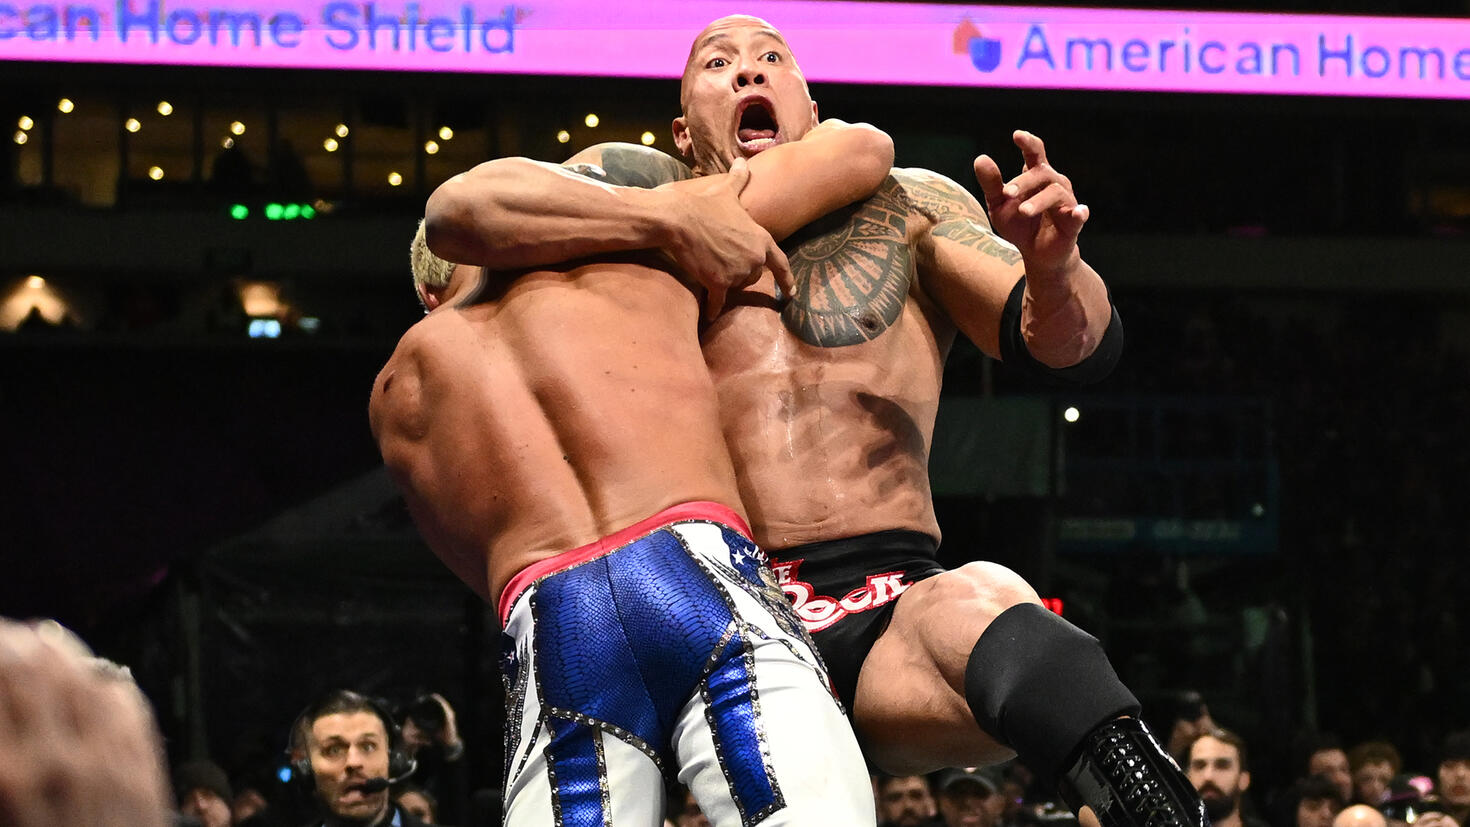 Cody Rhodes vs. The Rock